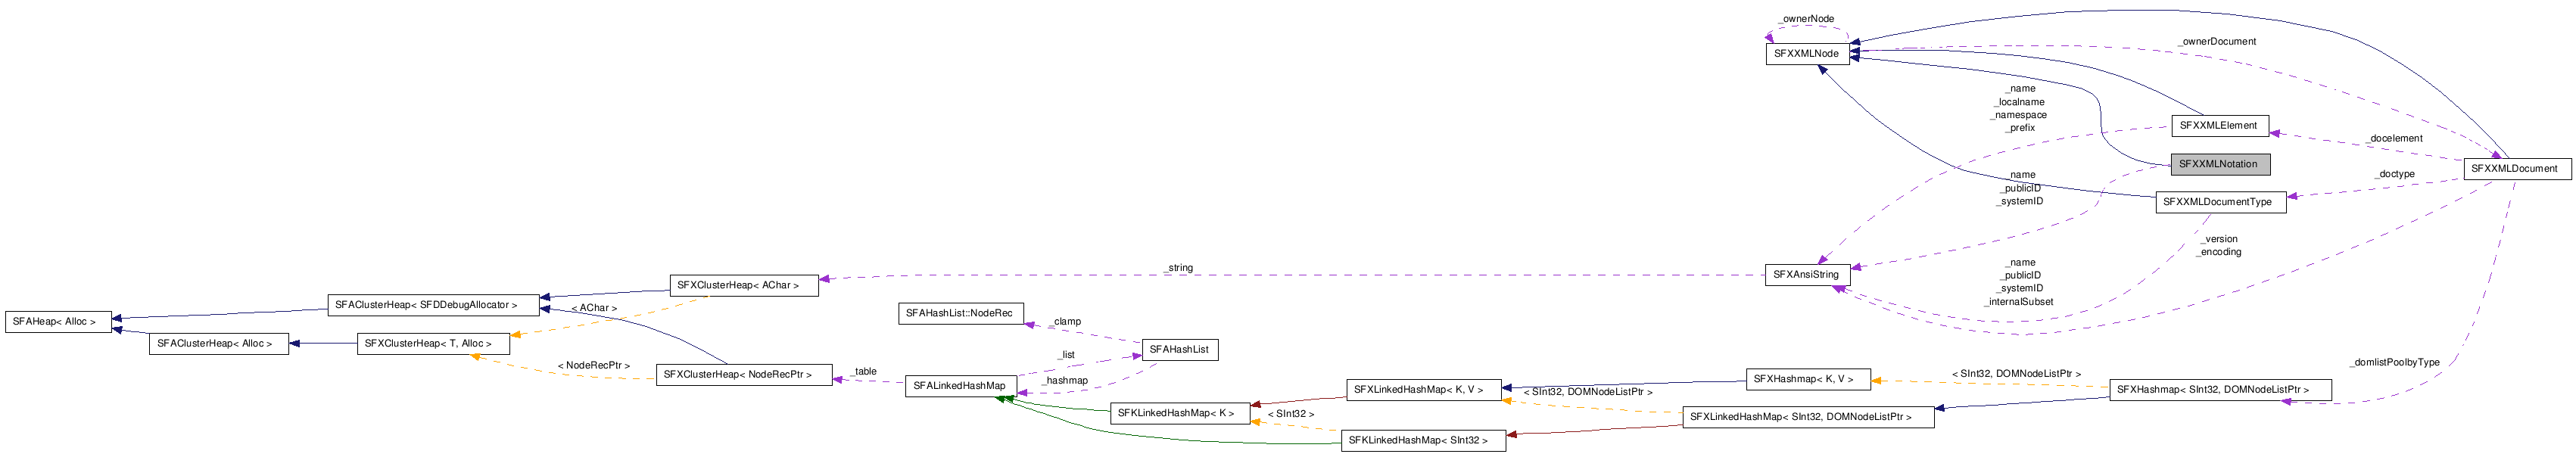  Collaboration diagram of SFXXMLNotationClass